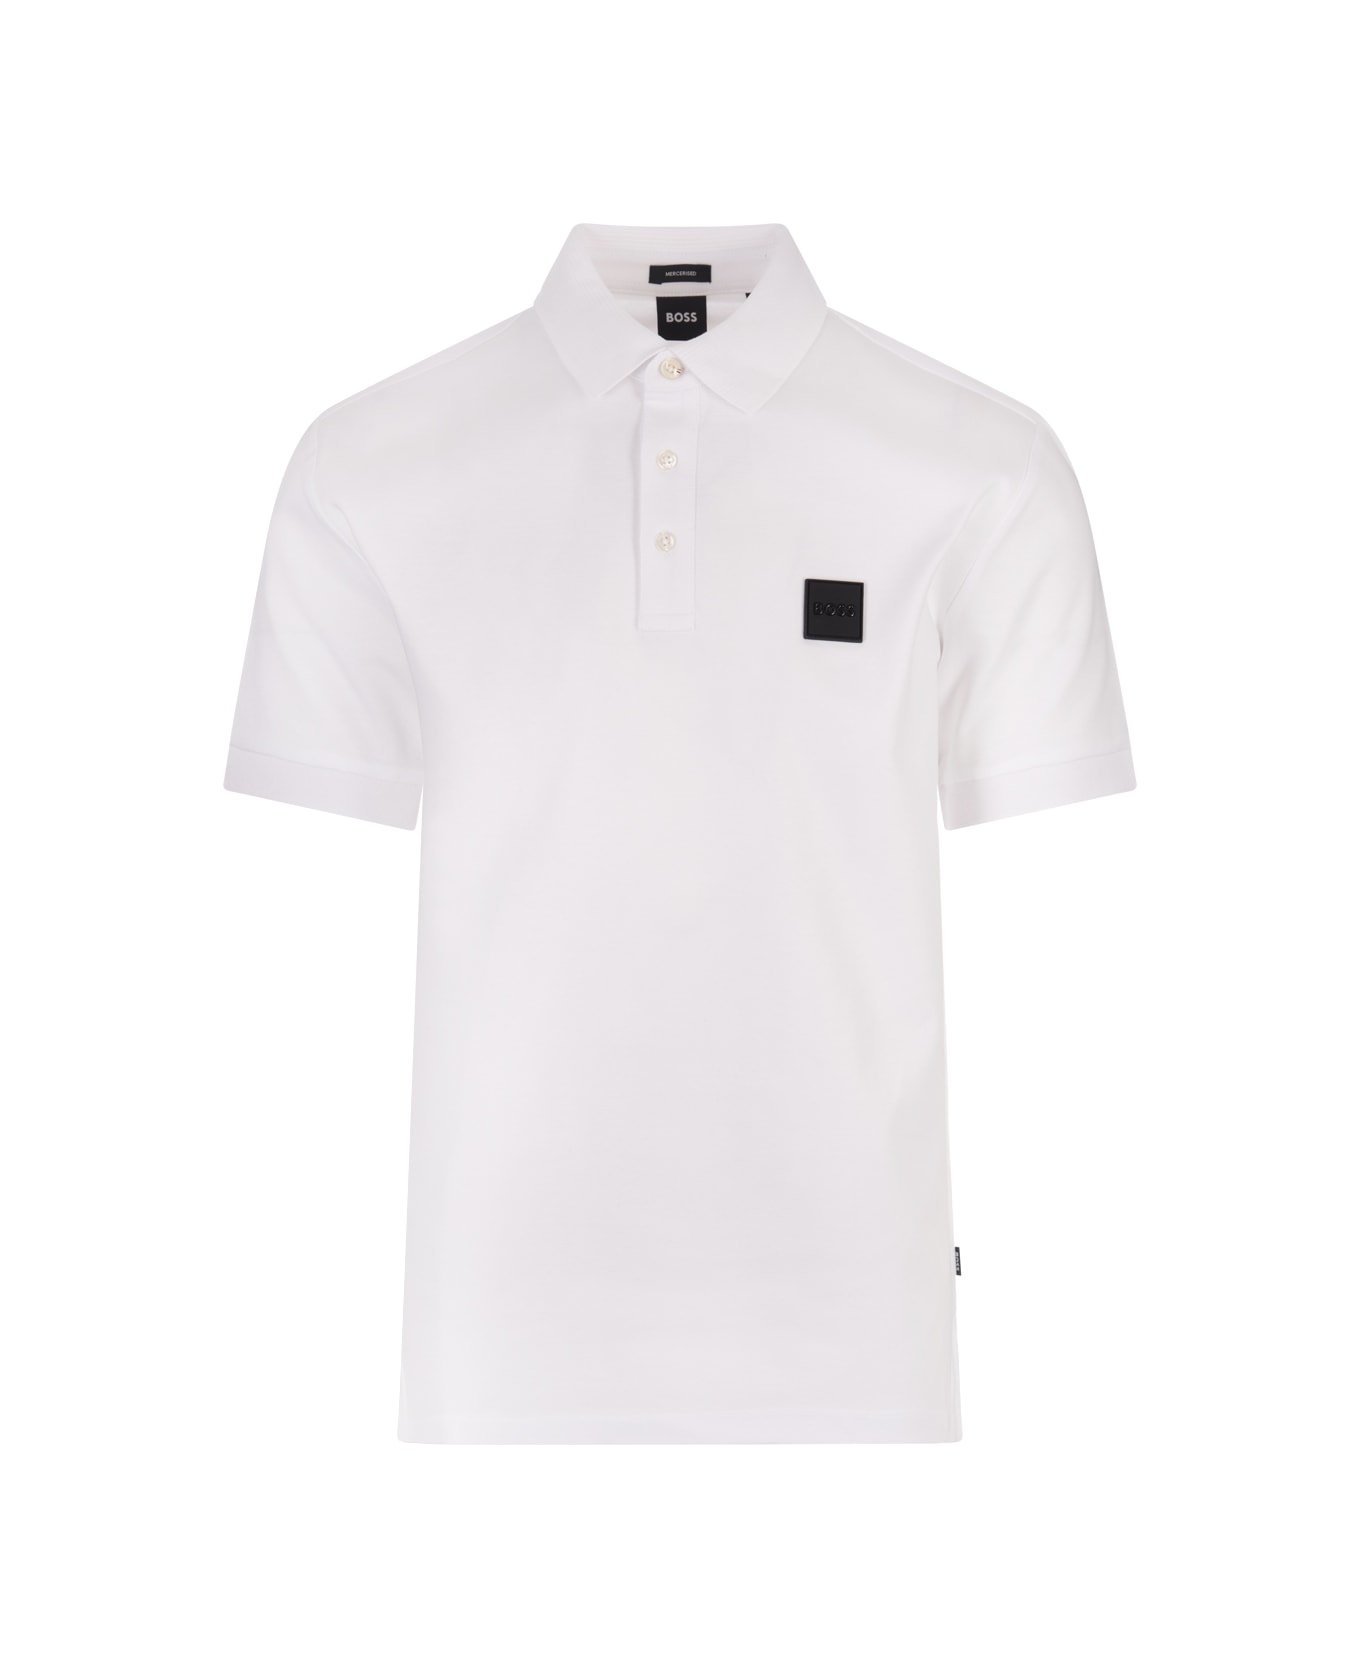 Hugo Boss White Cotton Jersey Polo Shirt With Logo Plaque - White